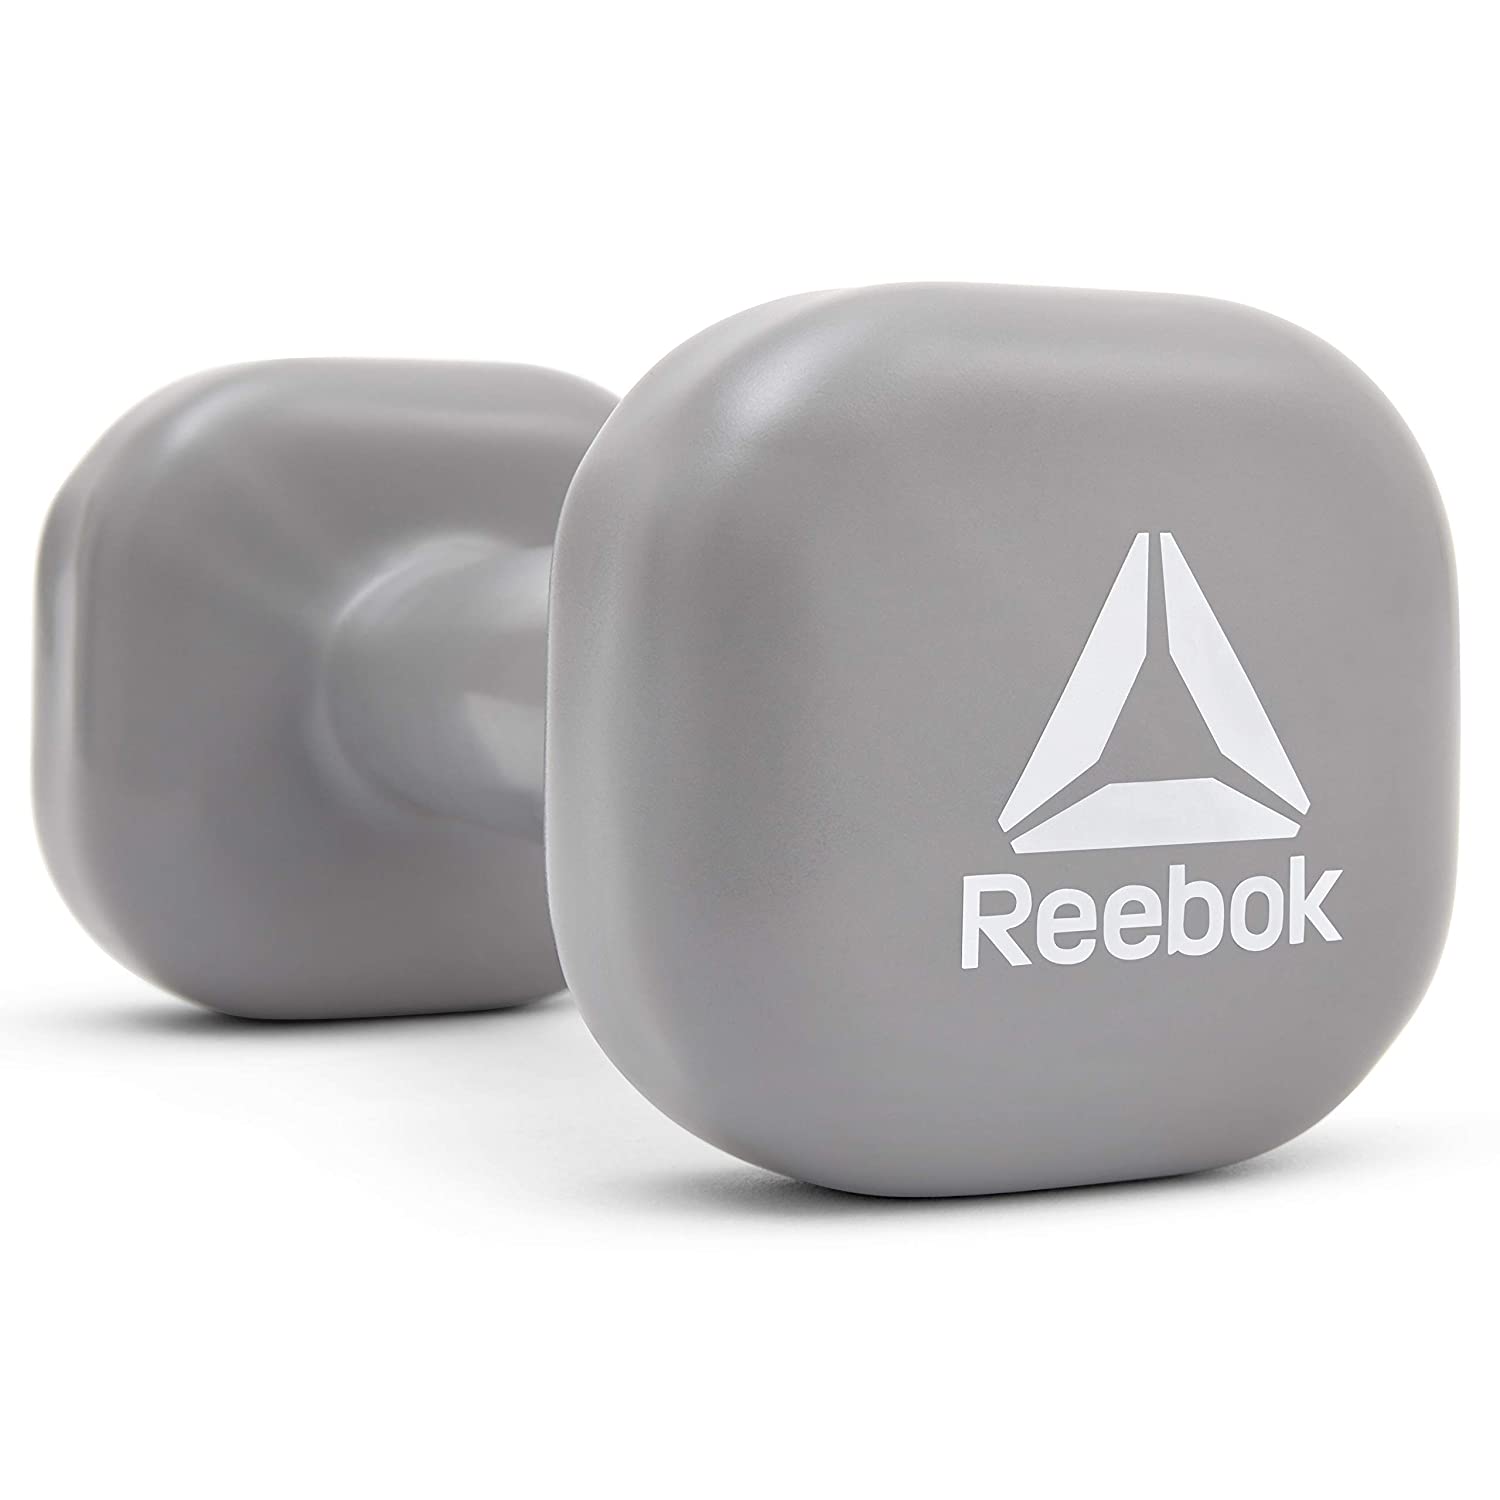 Reebok Unisex Dumbbells, Grey - 3 KG (Single Piece) - Best Price online Prokicksports.com